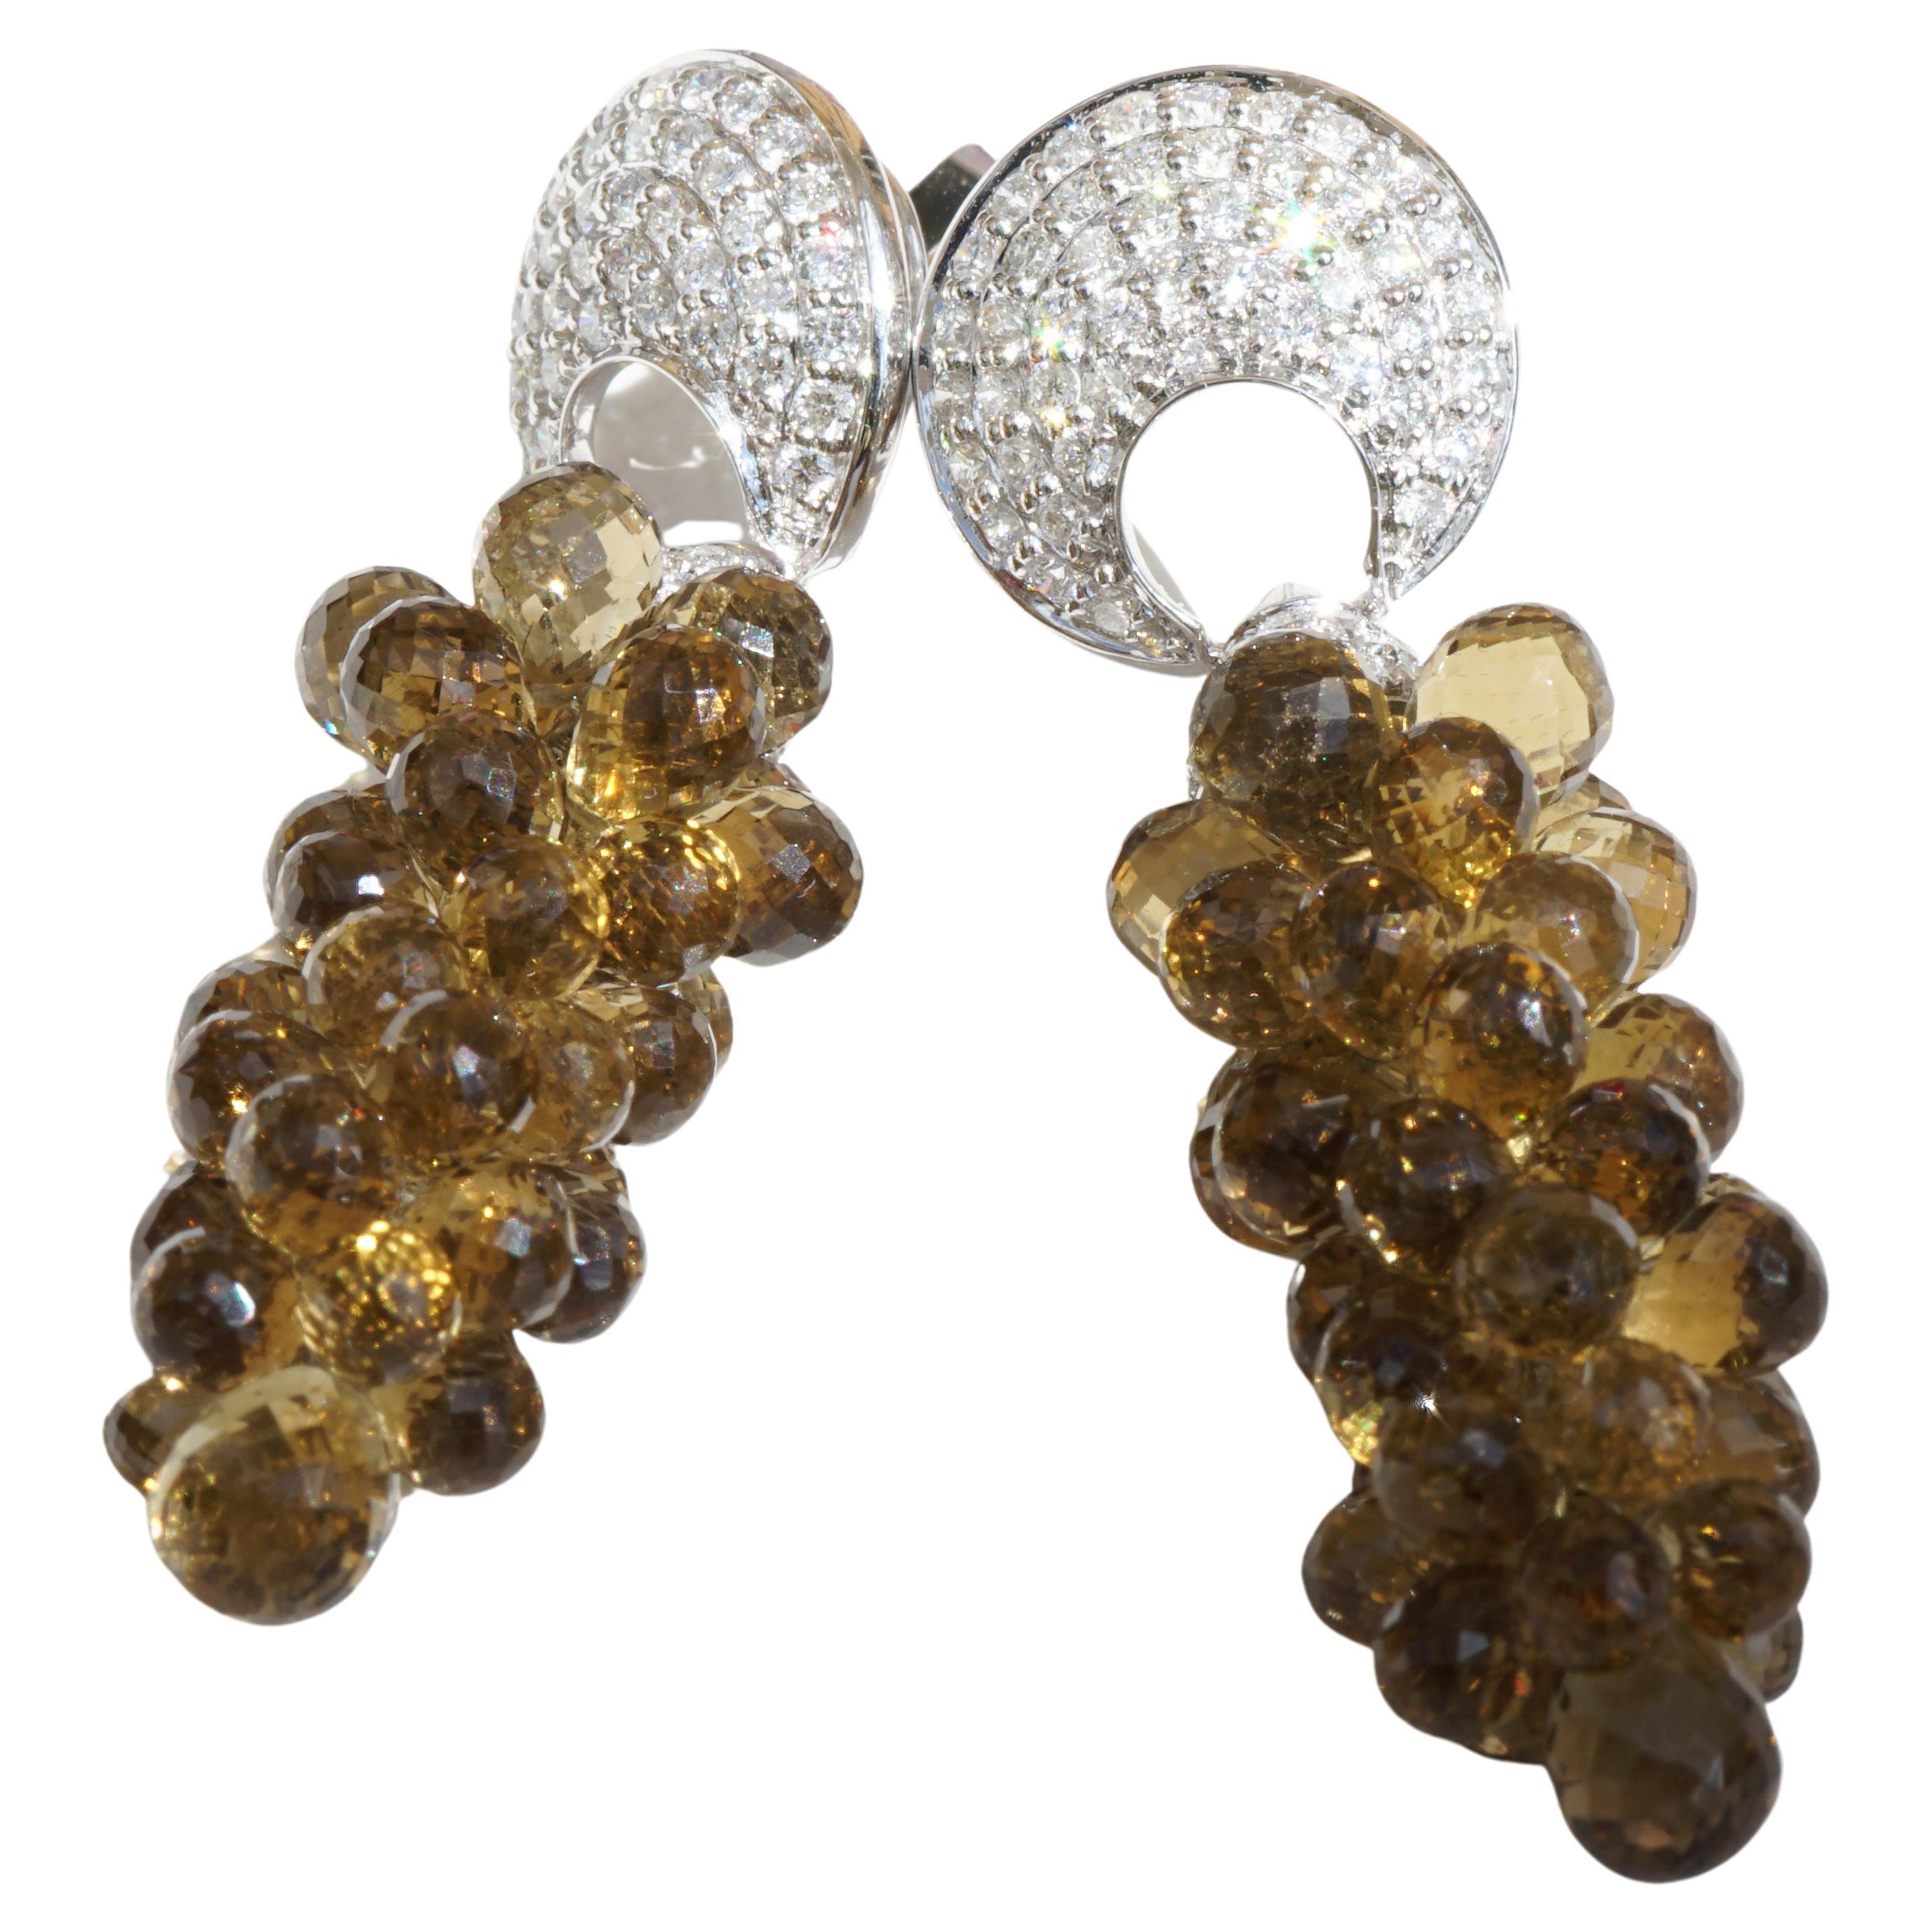 Brilliant 1.31 ct W/VS Smokey Quartz Earrings White Gold in the Shape of Grapes